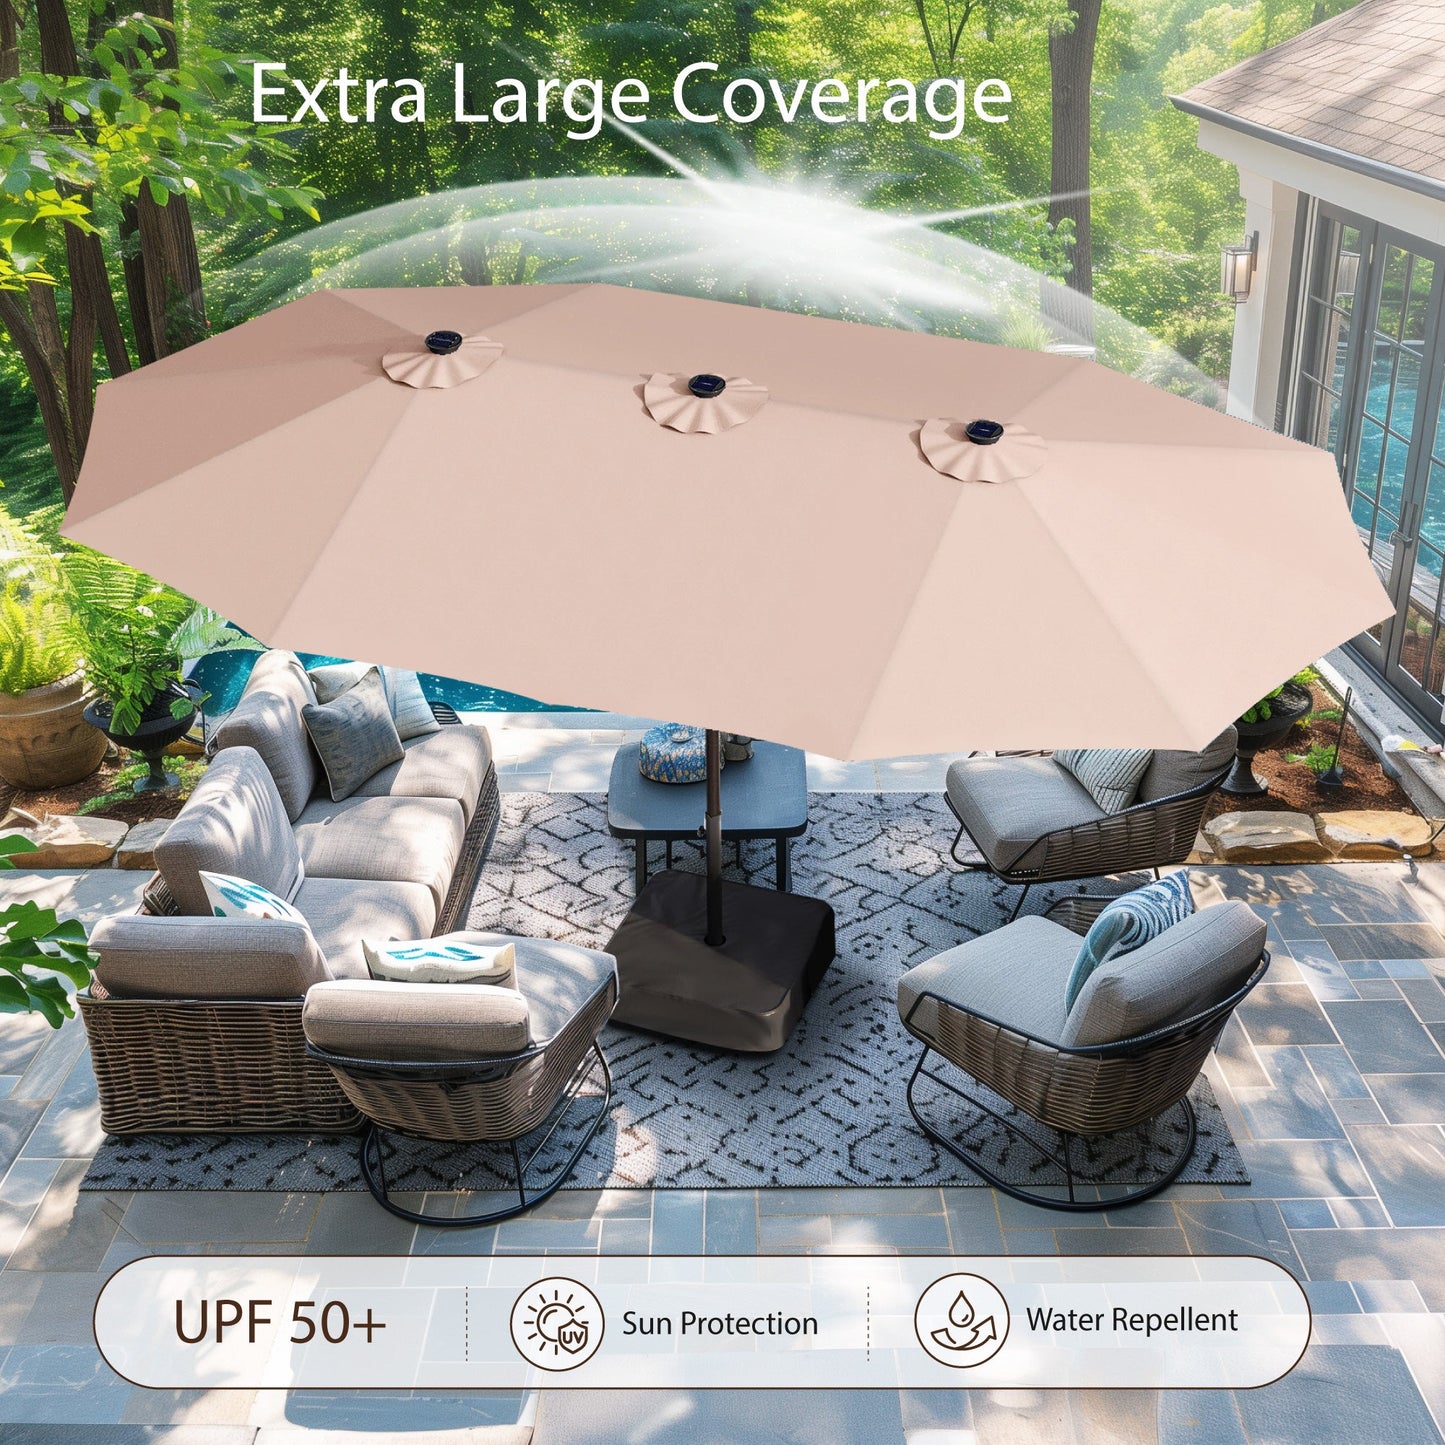 Alpha Joy 15ft Extra Large Outdoor Patio Double-Sided Umbrella with Solar Lights & Umbrella Base, Beige